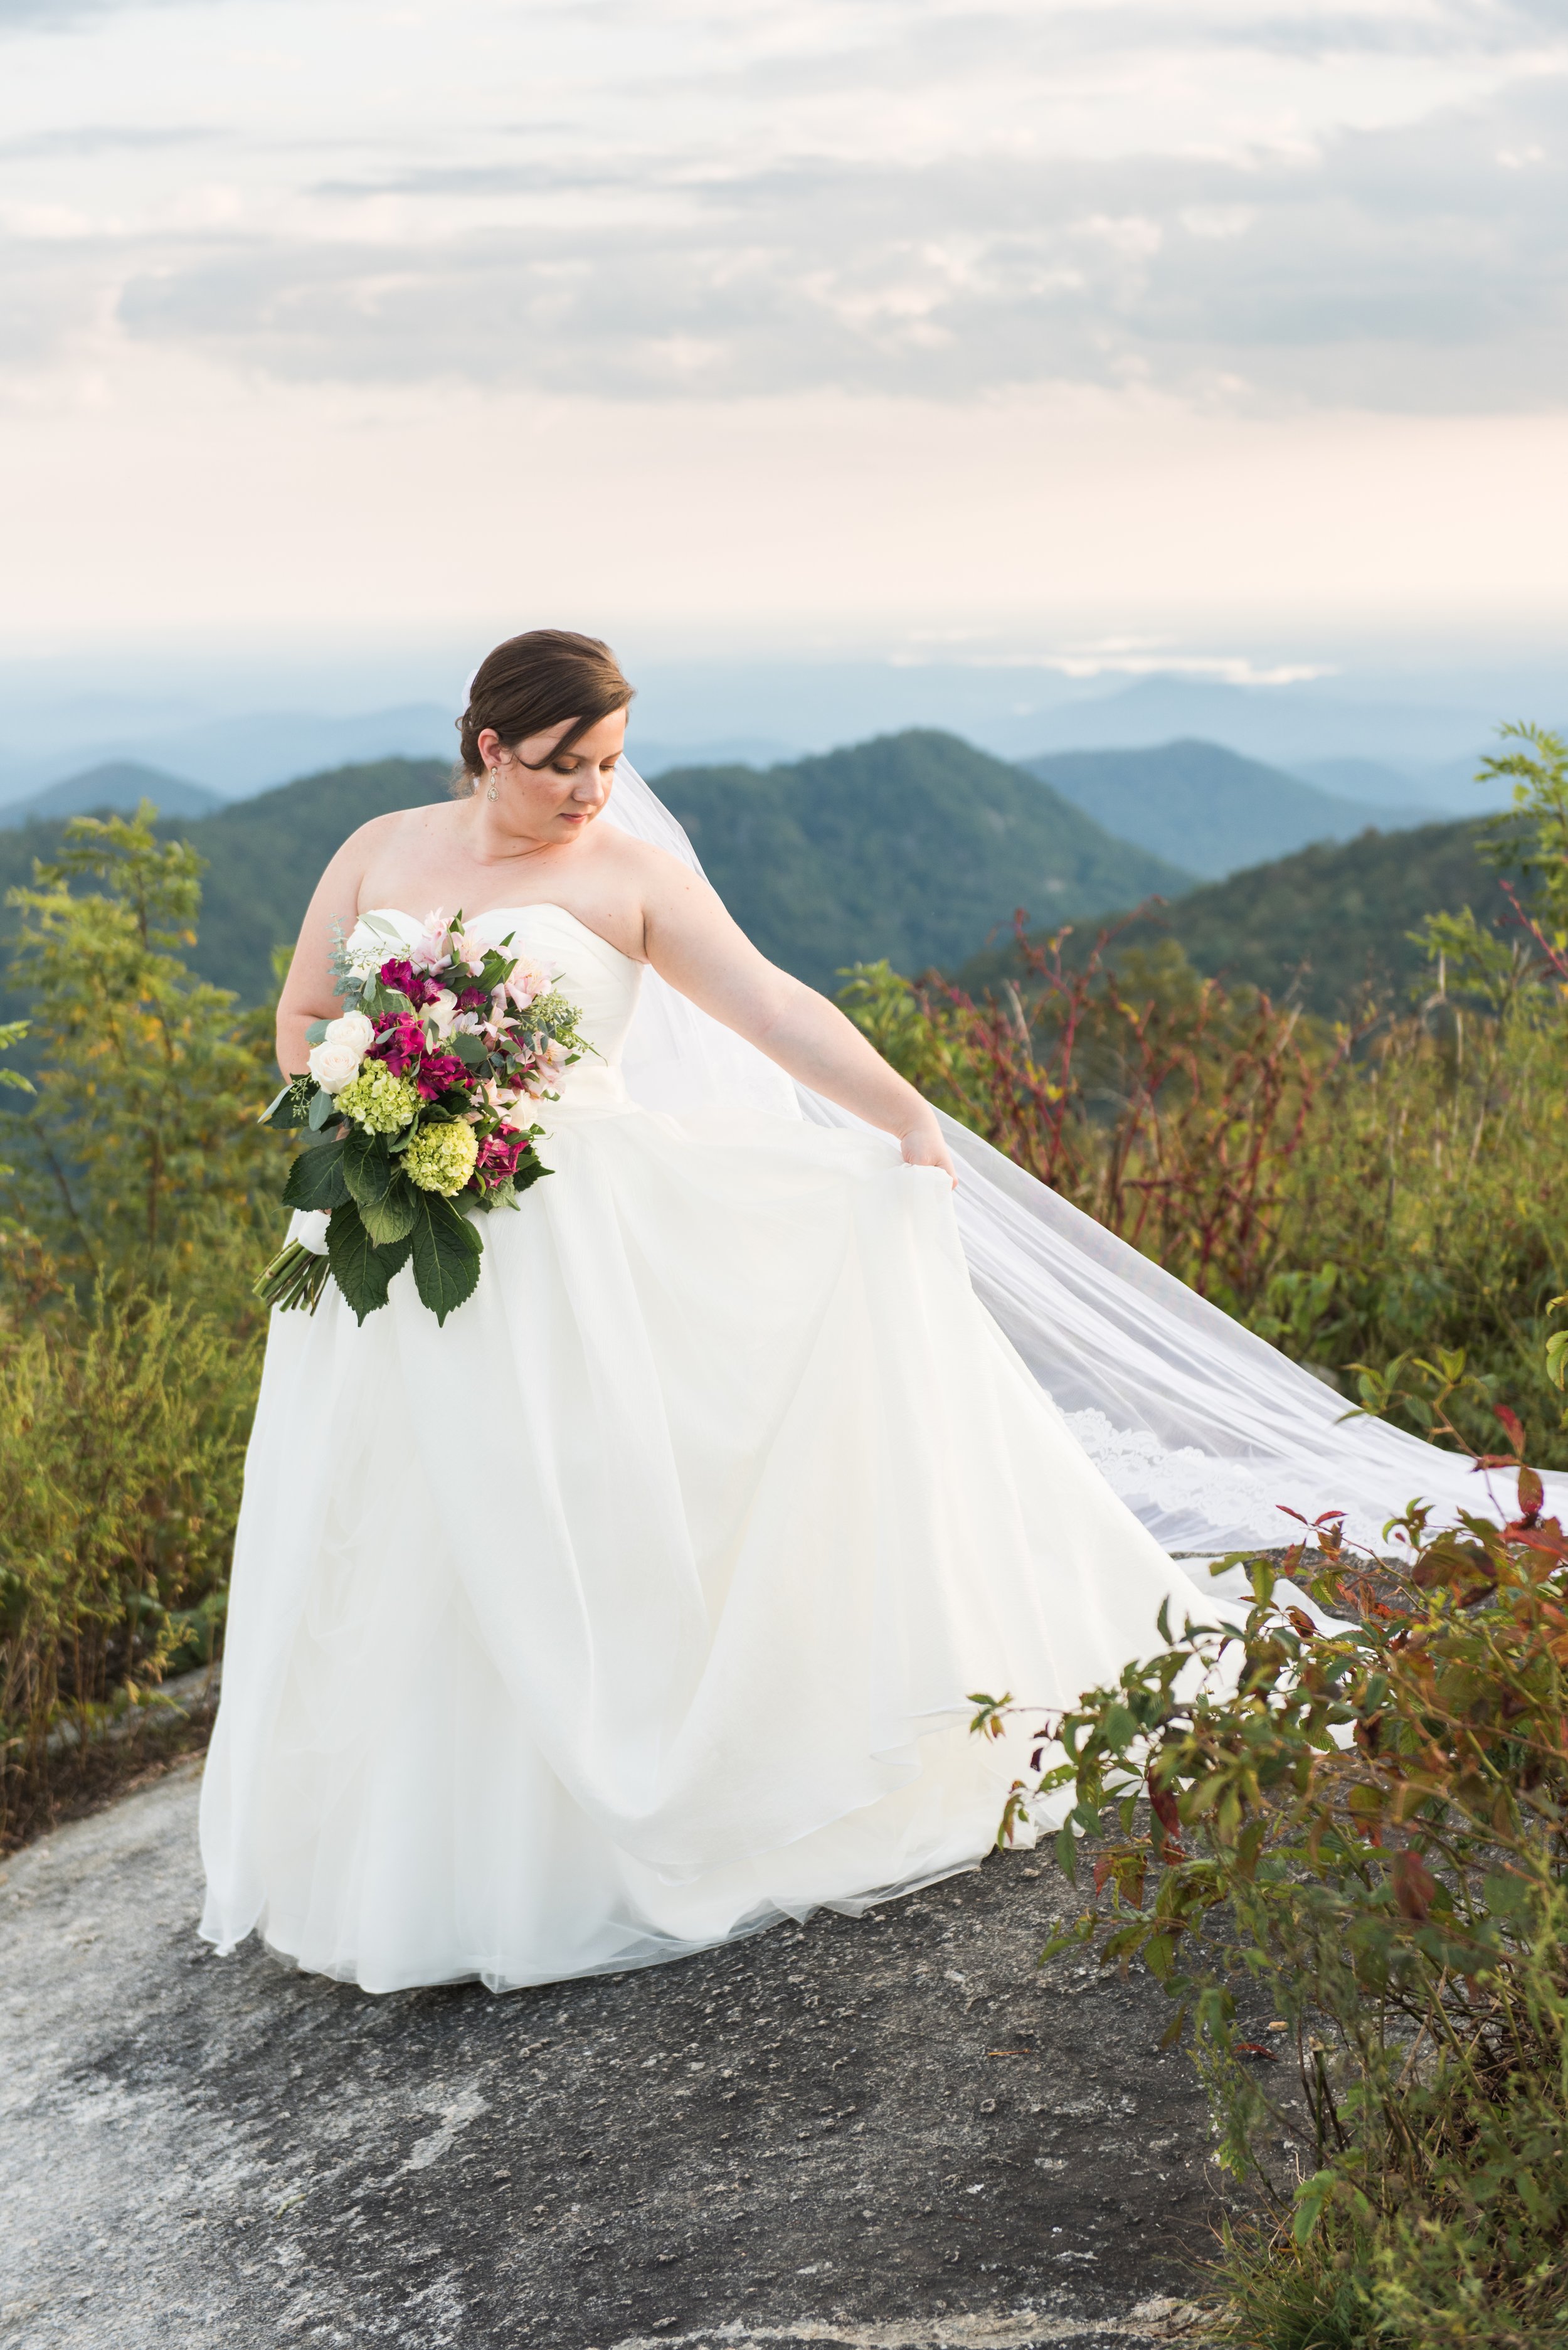 Sassafras Mountain Bridal Portrait | Kimberly Cauble Photography